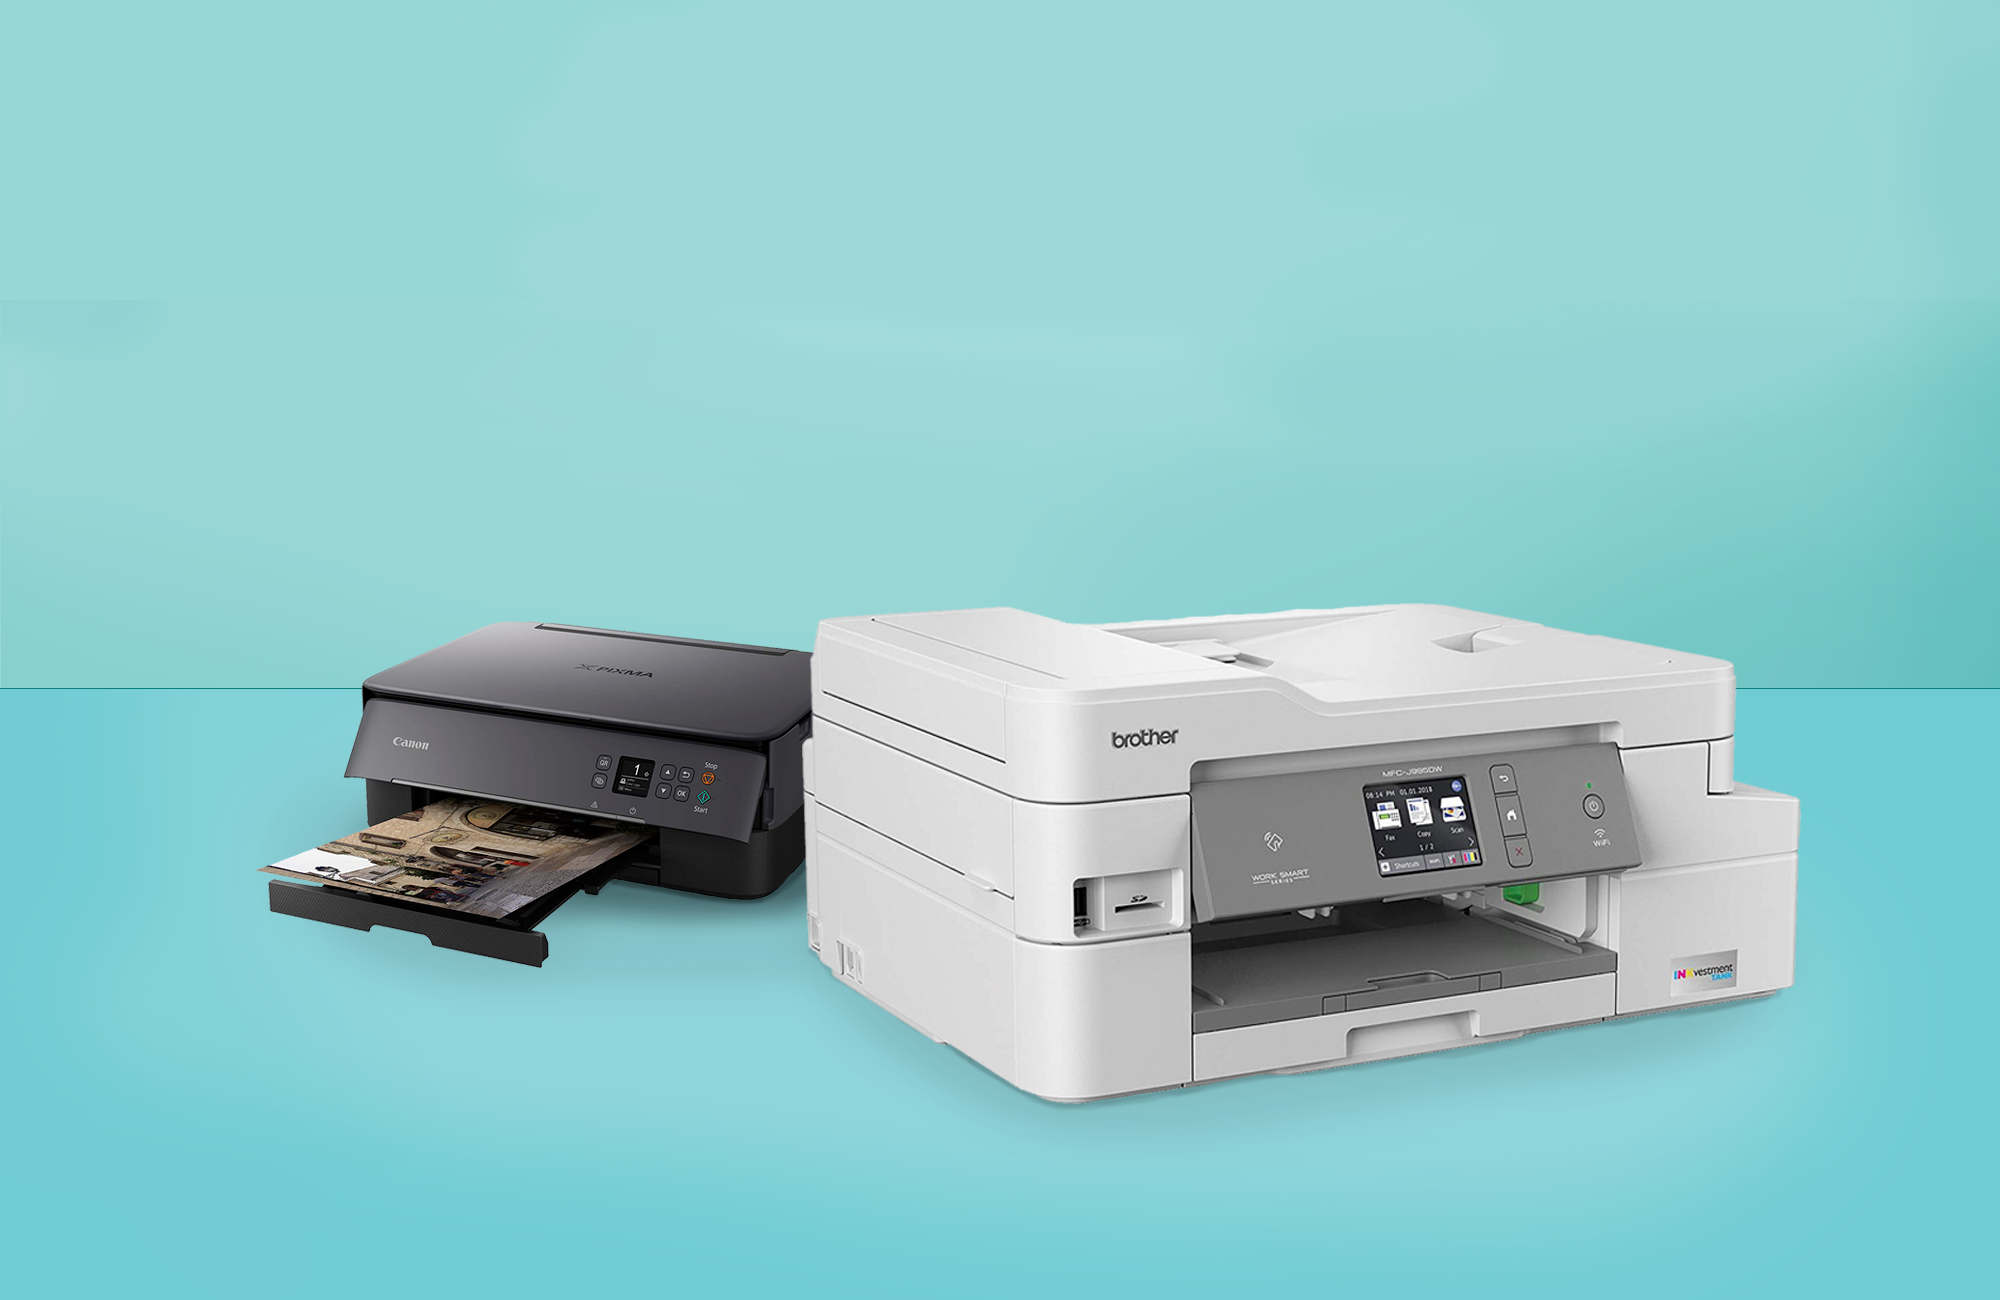 Grand Brig In de genade van 8 Best Printers of 2022 – Top-Rated Printer for Home Use